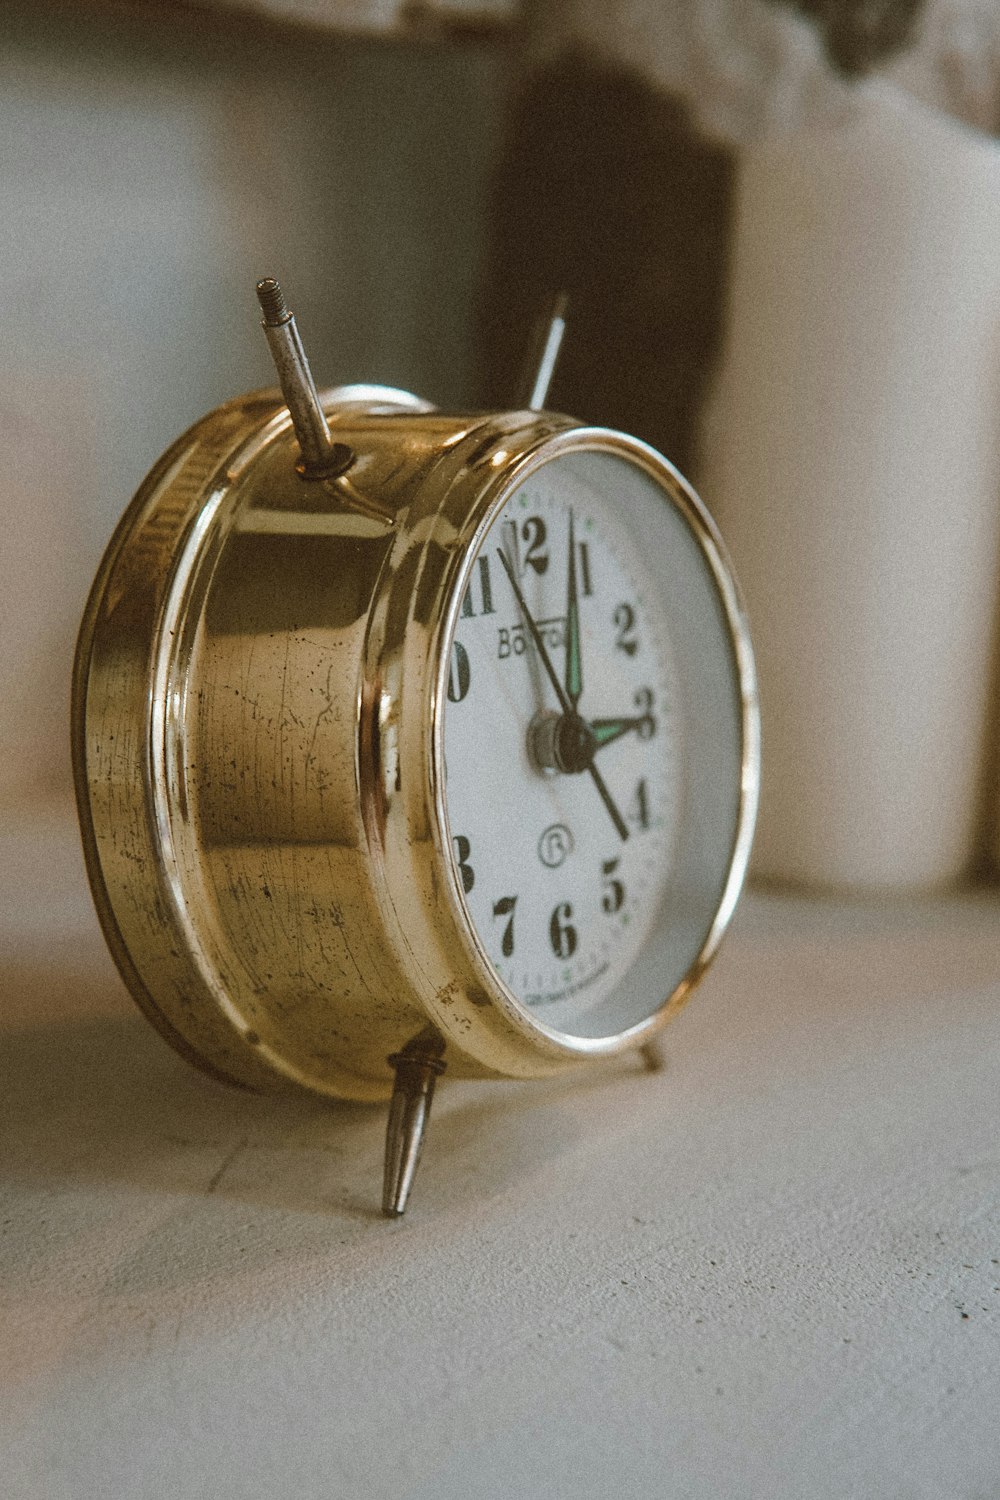 gold and white analog alarm clock